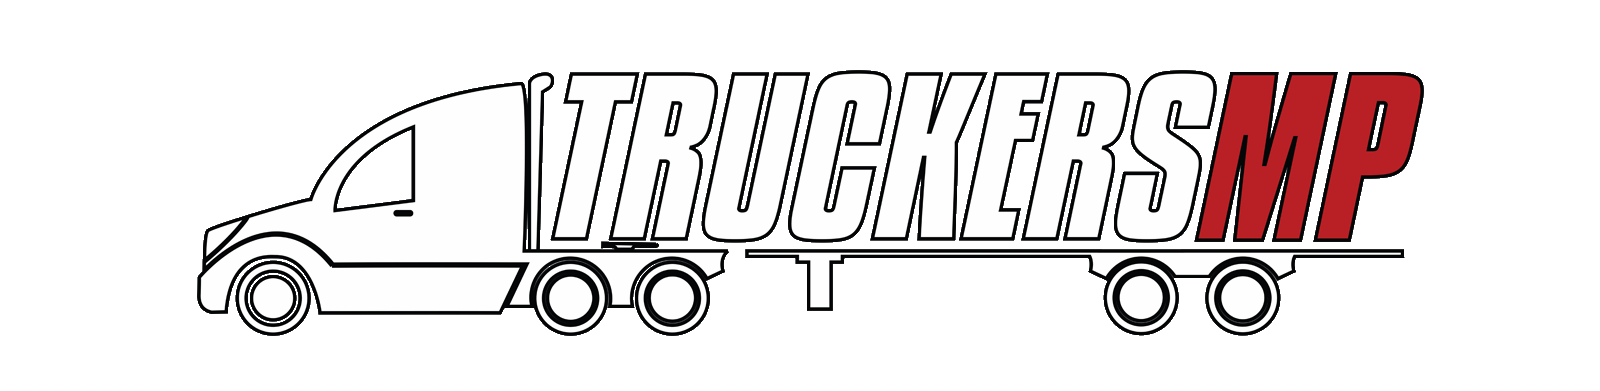 truckersmp-logo